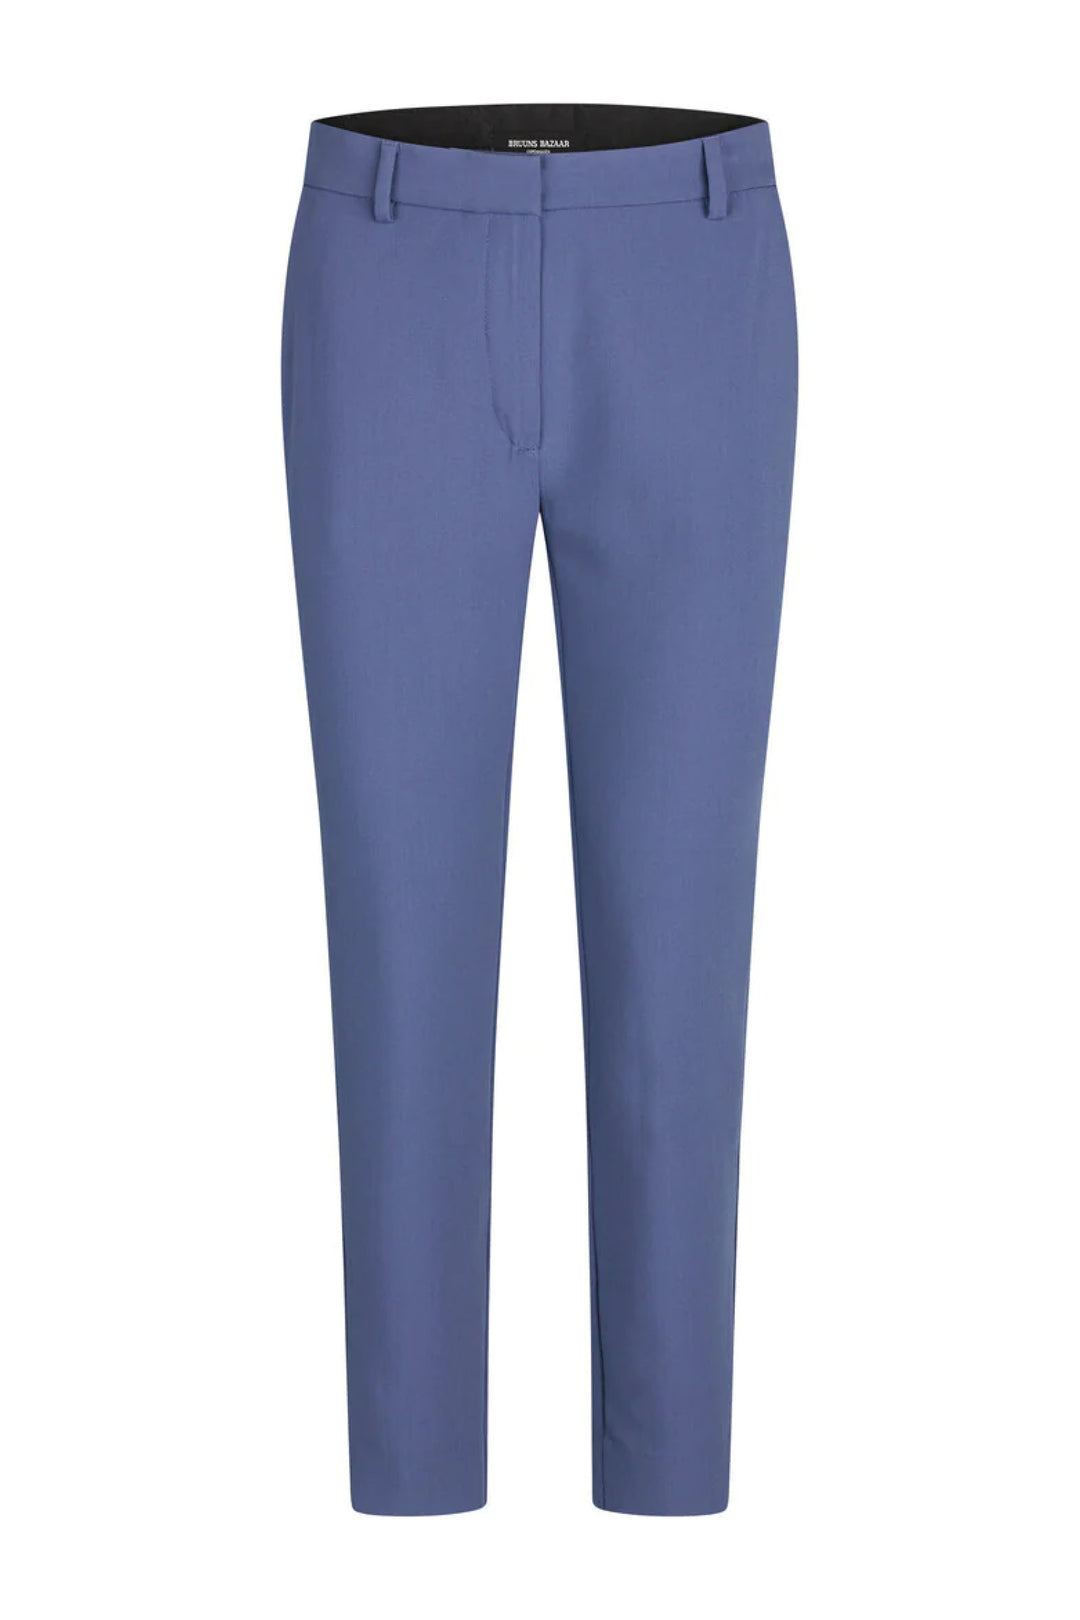 Bruuns Bazaar Women CindySusBBLinea pants Pants Blue Indigo